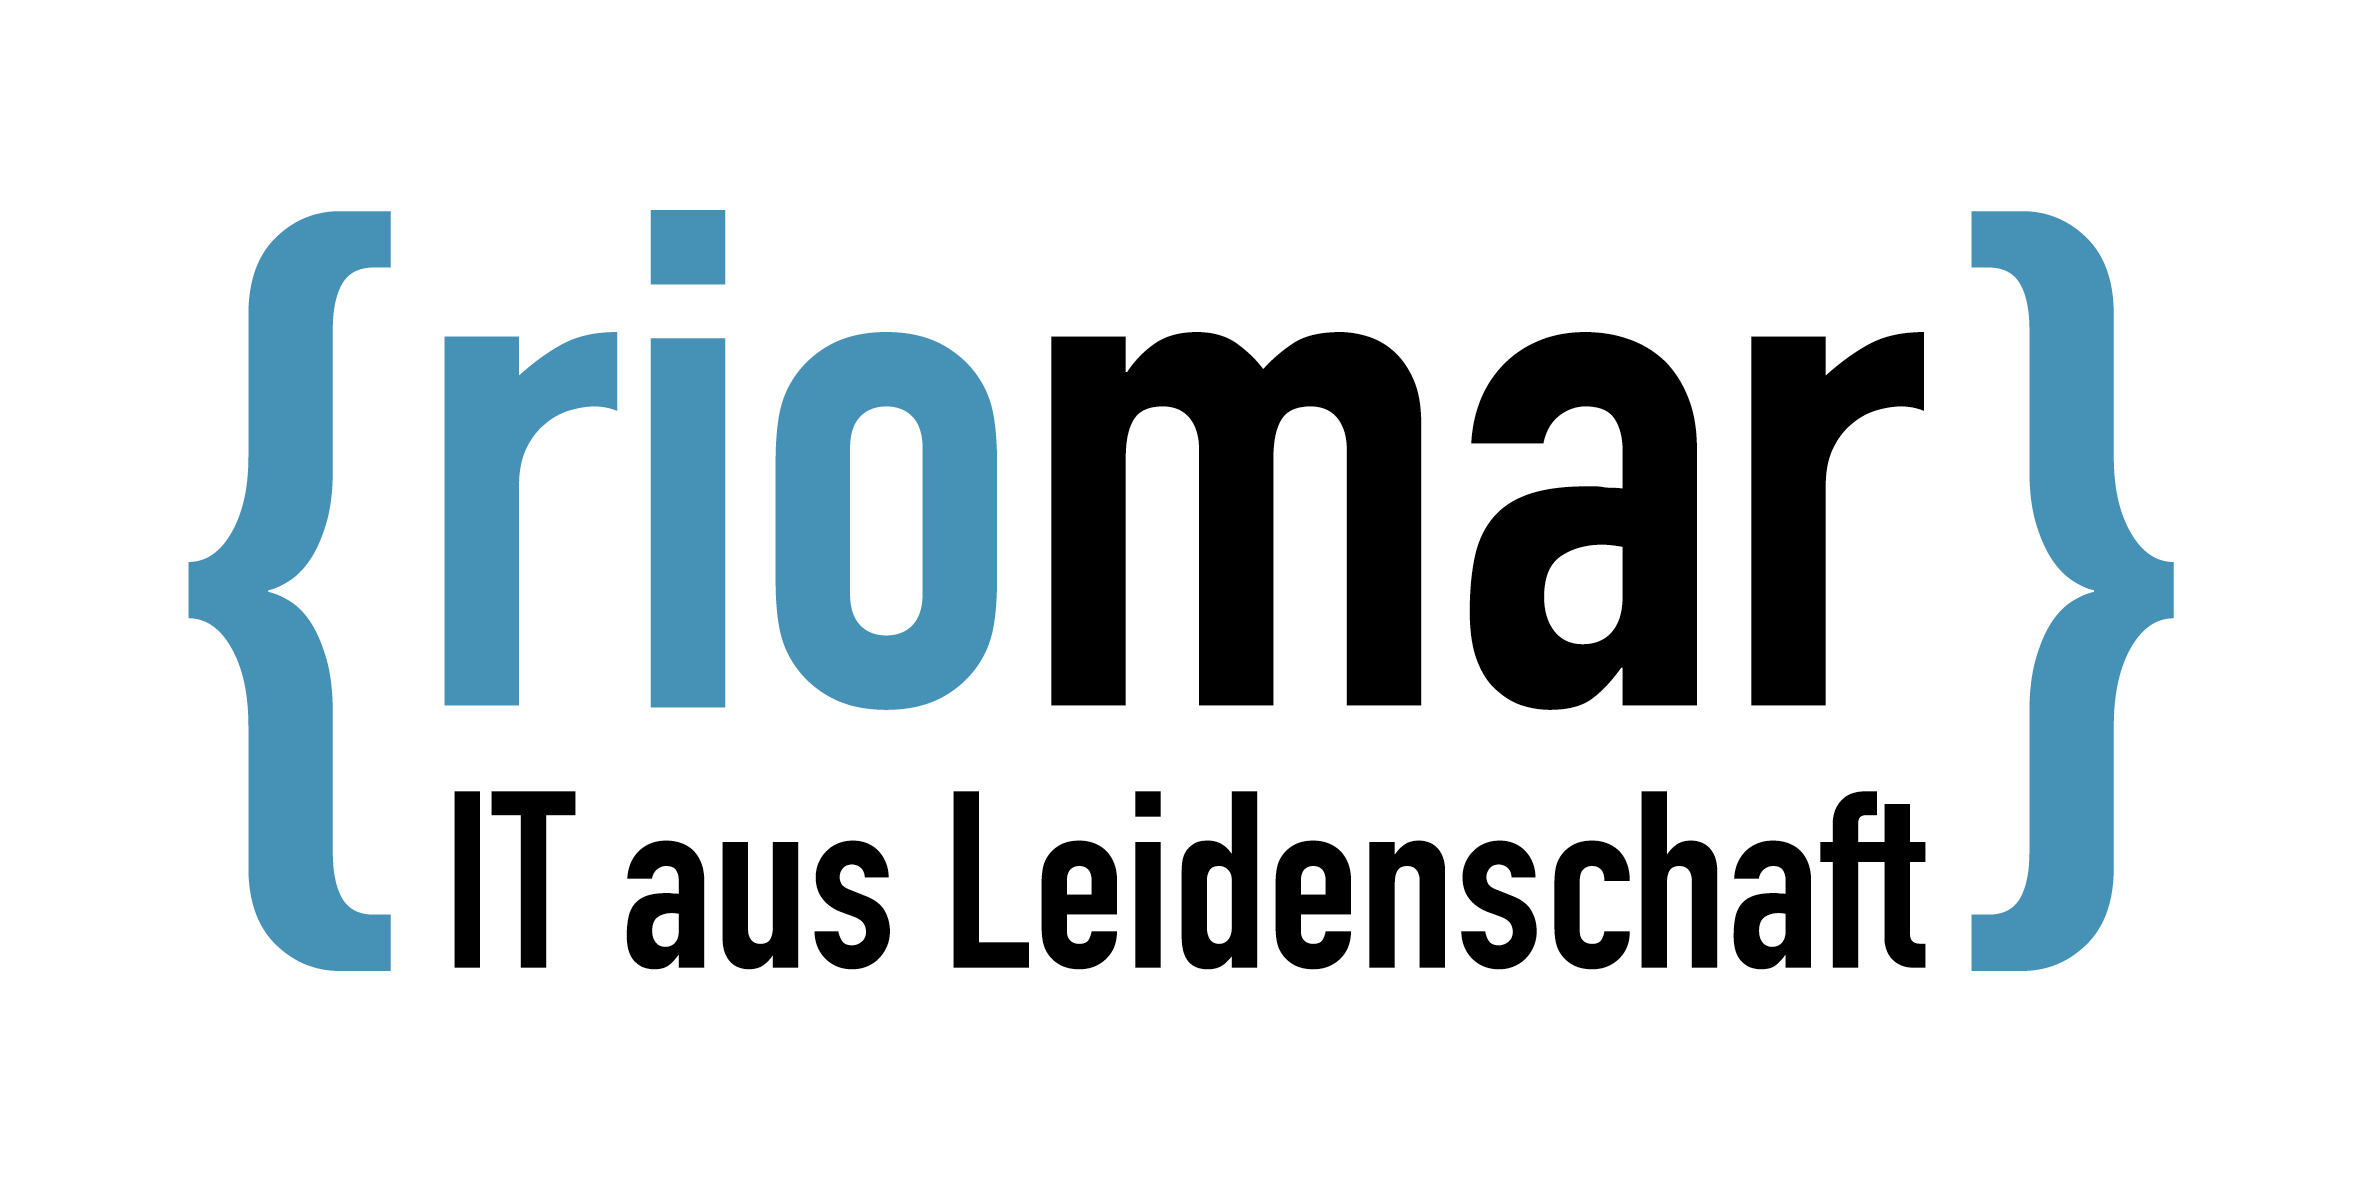 RioMar GmbH